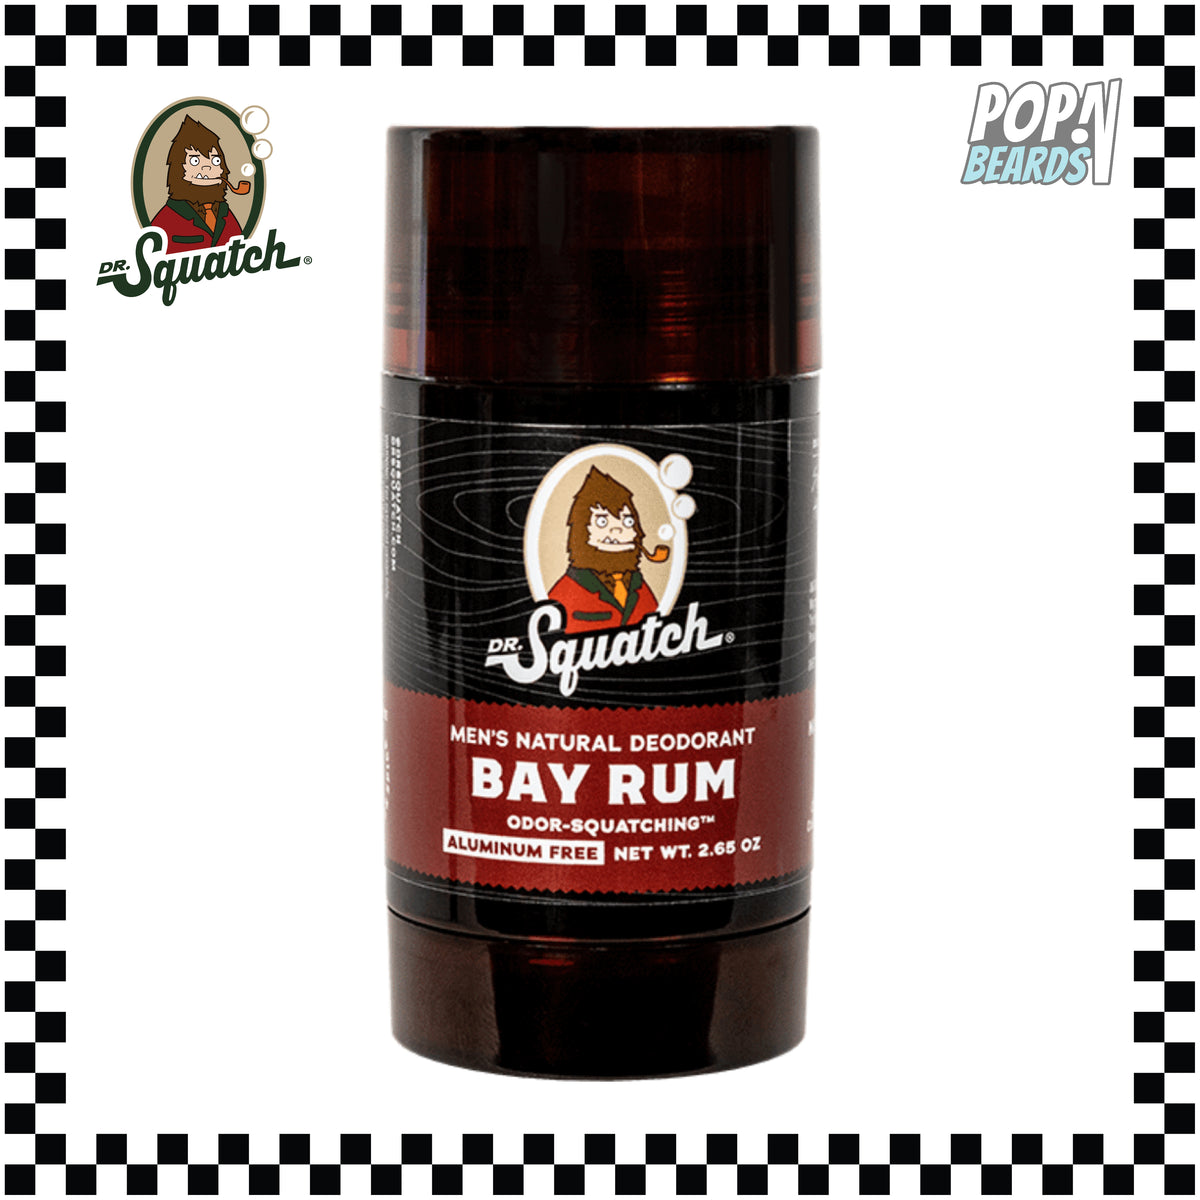 Dr. Squatch: Deodorant, Bay Rum – POPnBeards